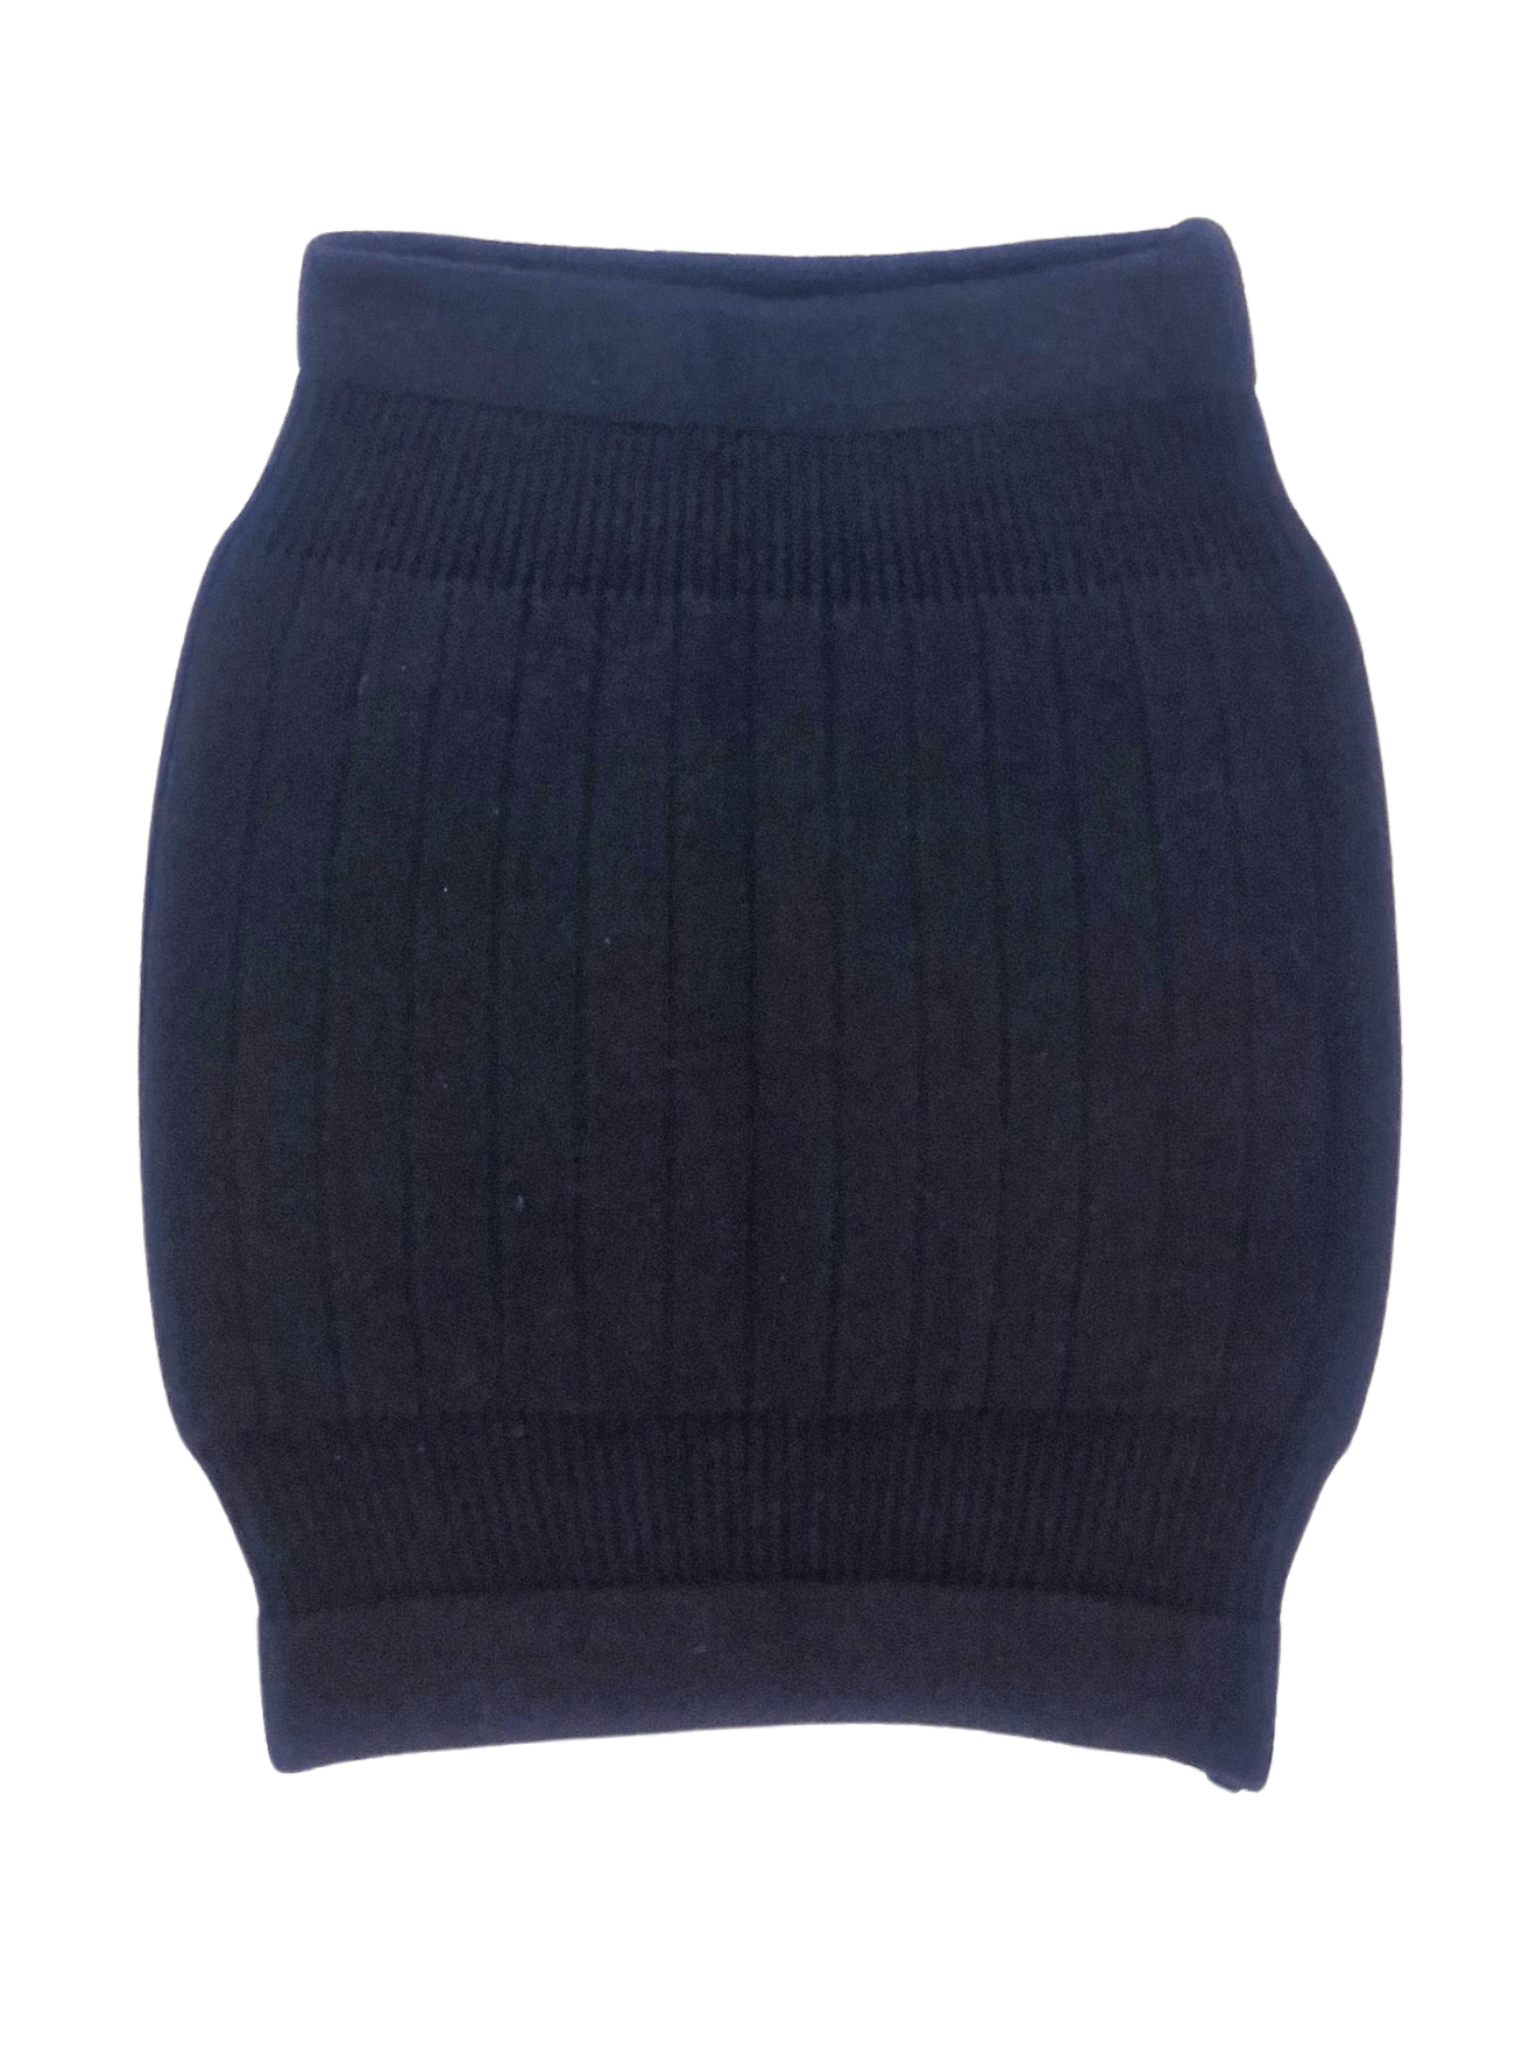 black knitted core warmer, the Koji Luxe